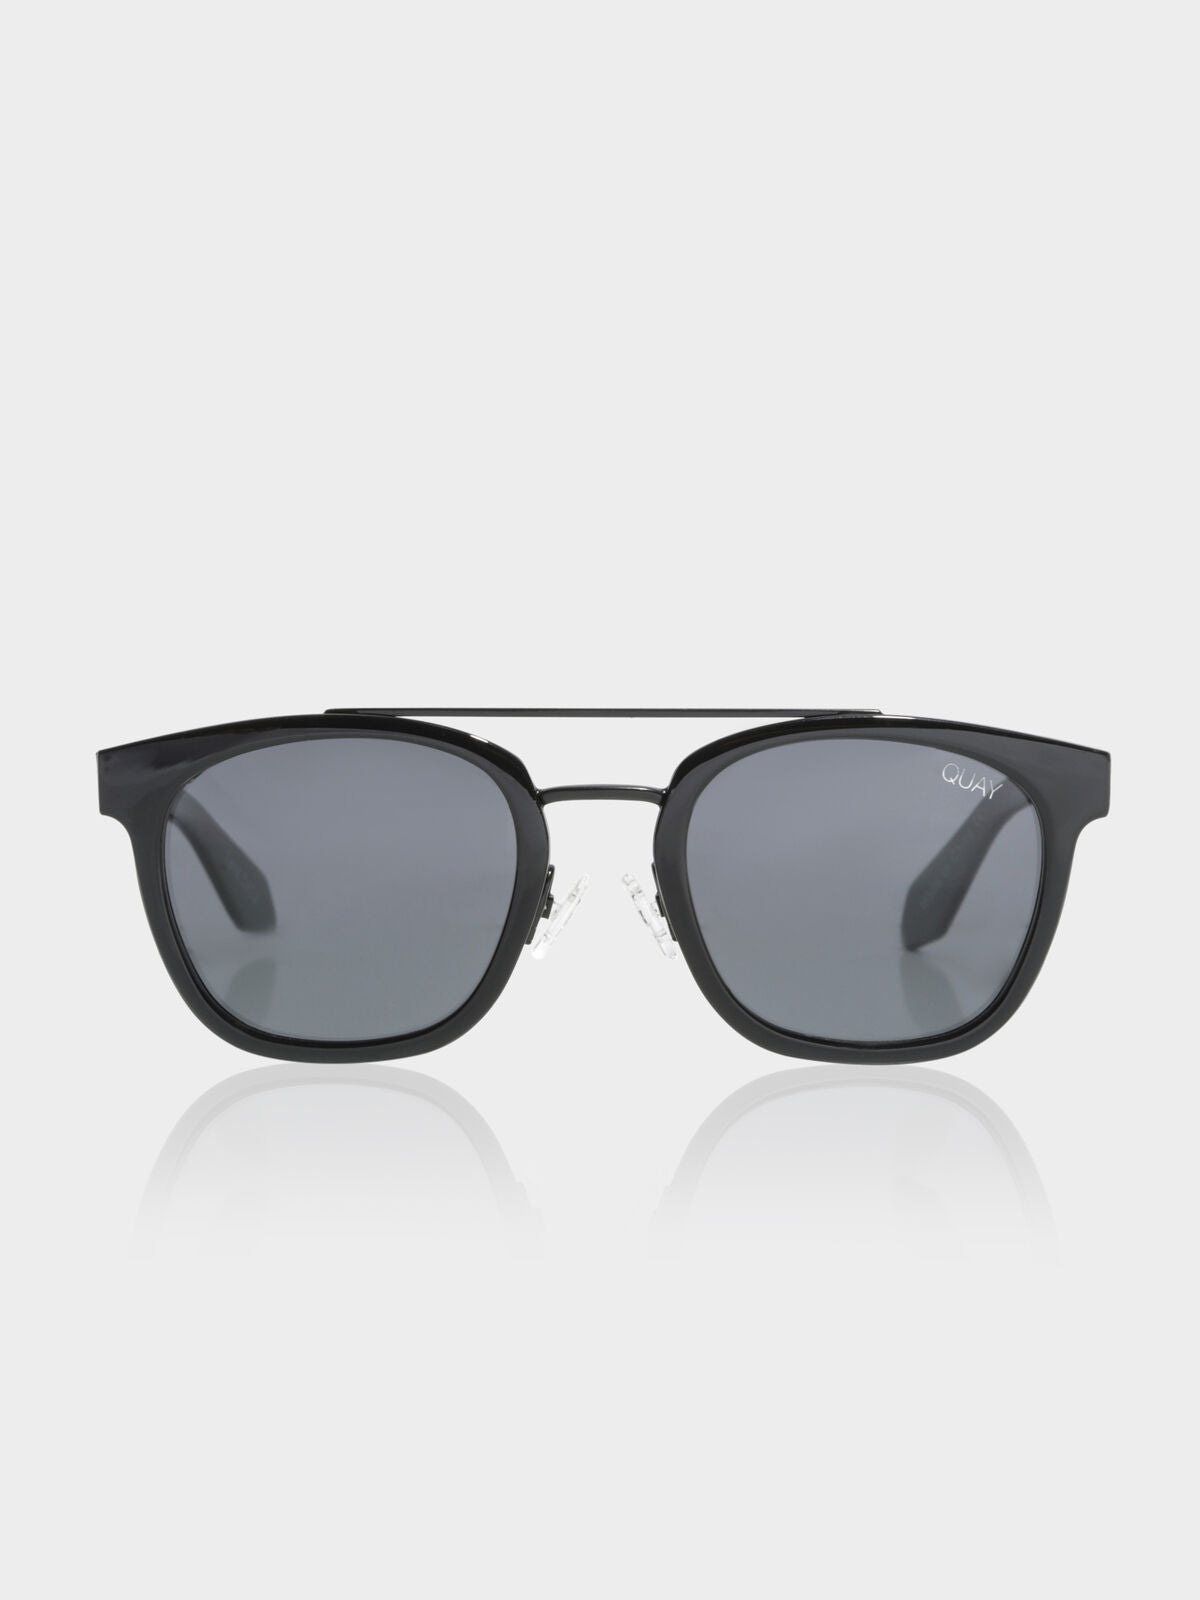 Coolin Sunglasses in Black Smoke